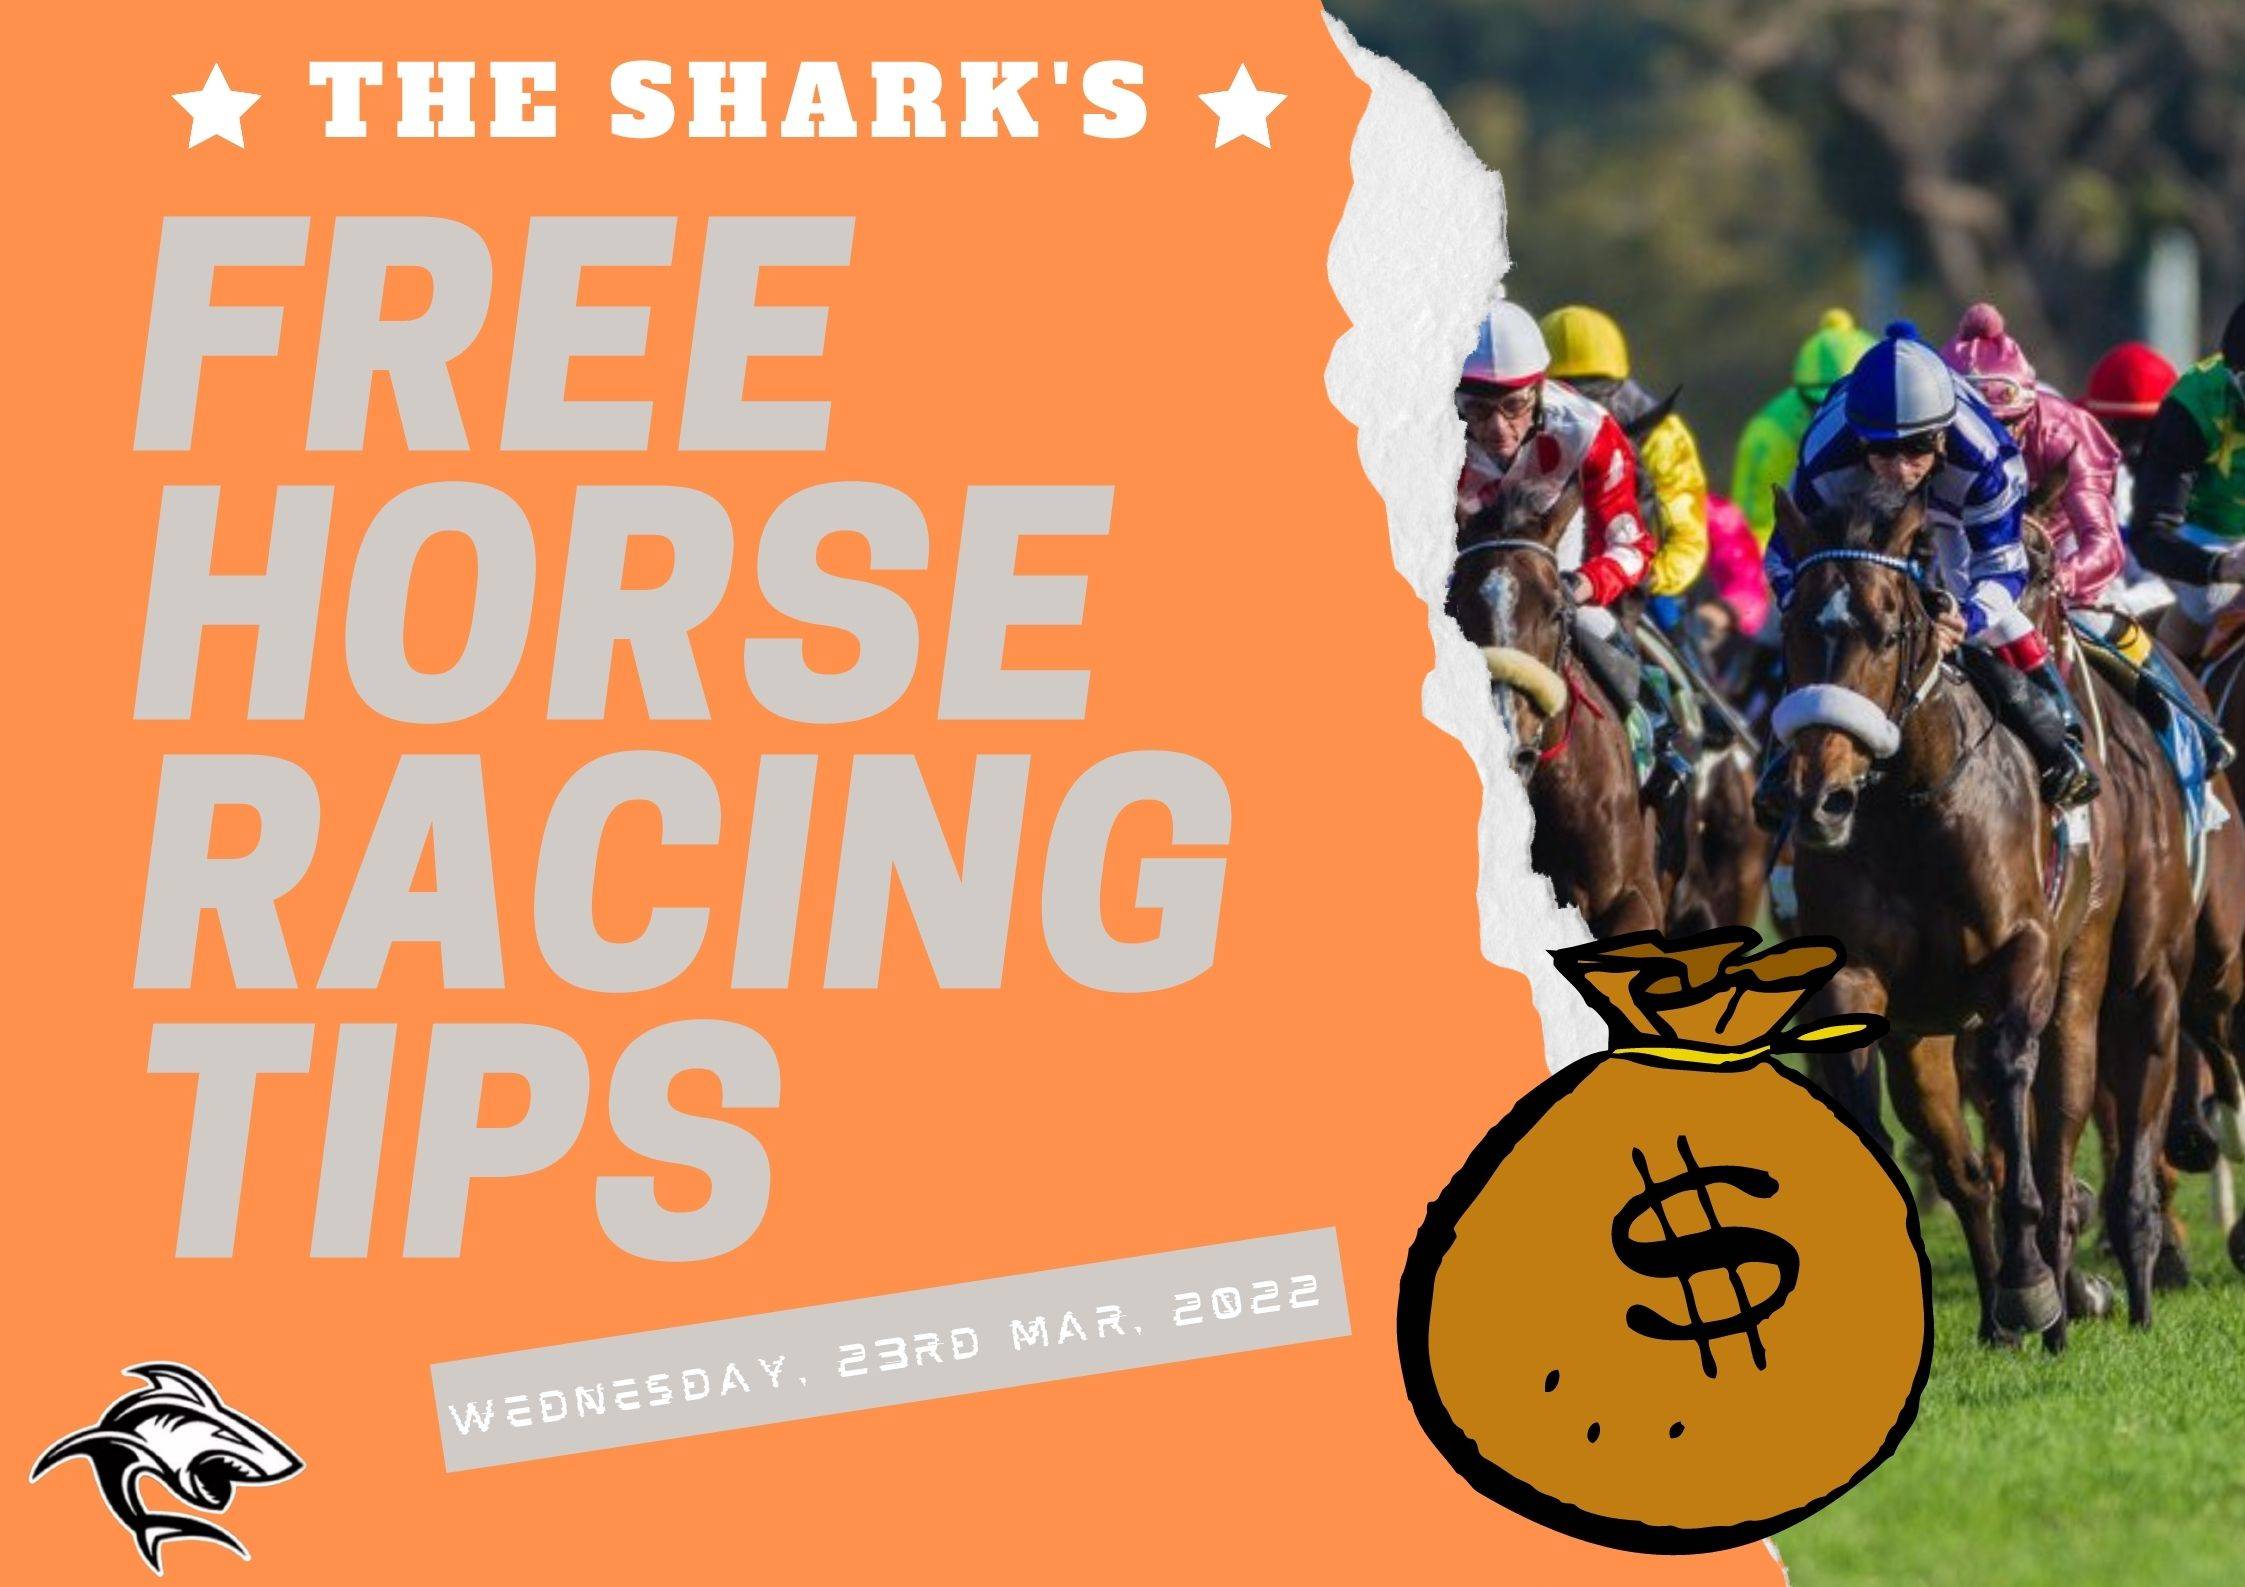 Free Horse Racing Tips - 23rd Mar